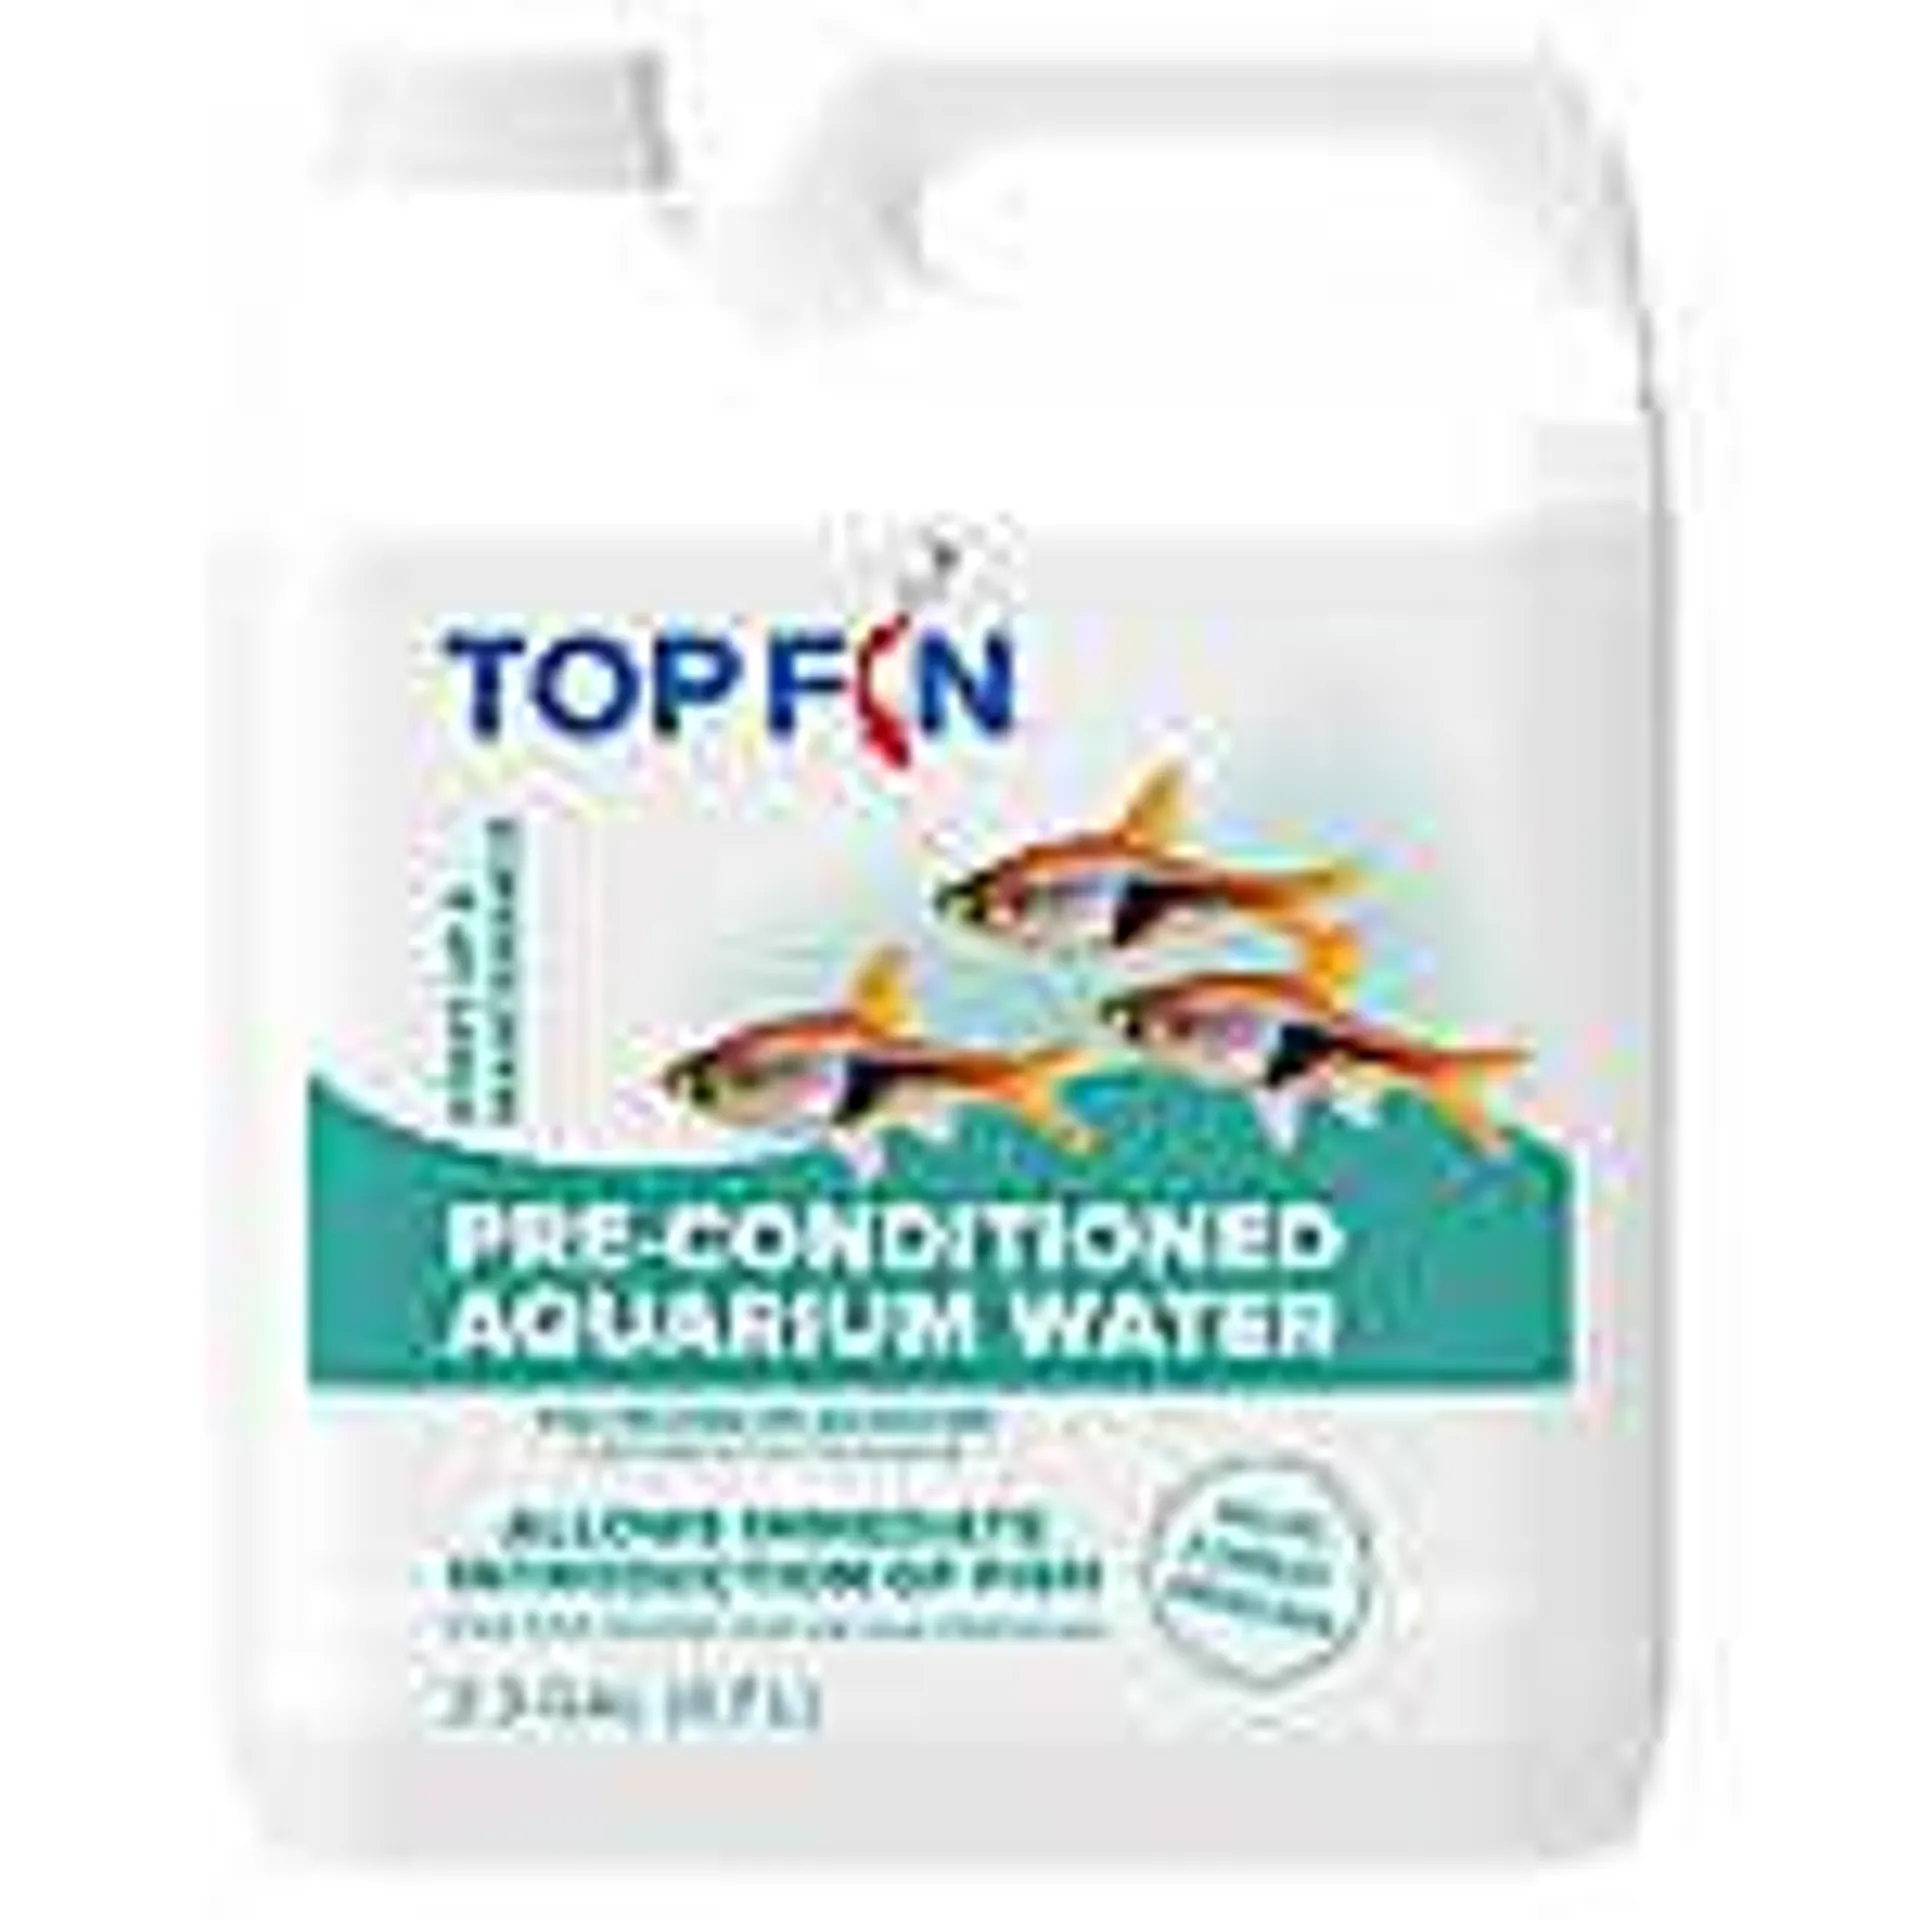 Top Fin ® Pre-Conditioned Aquarium Water